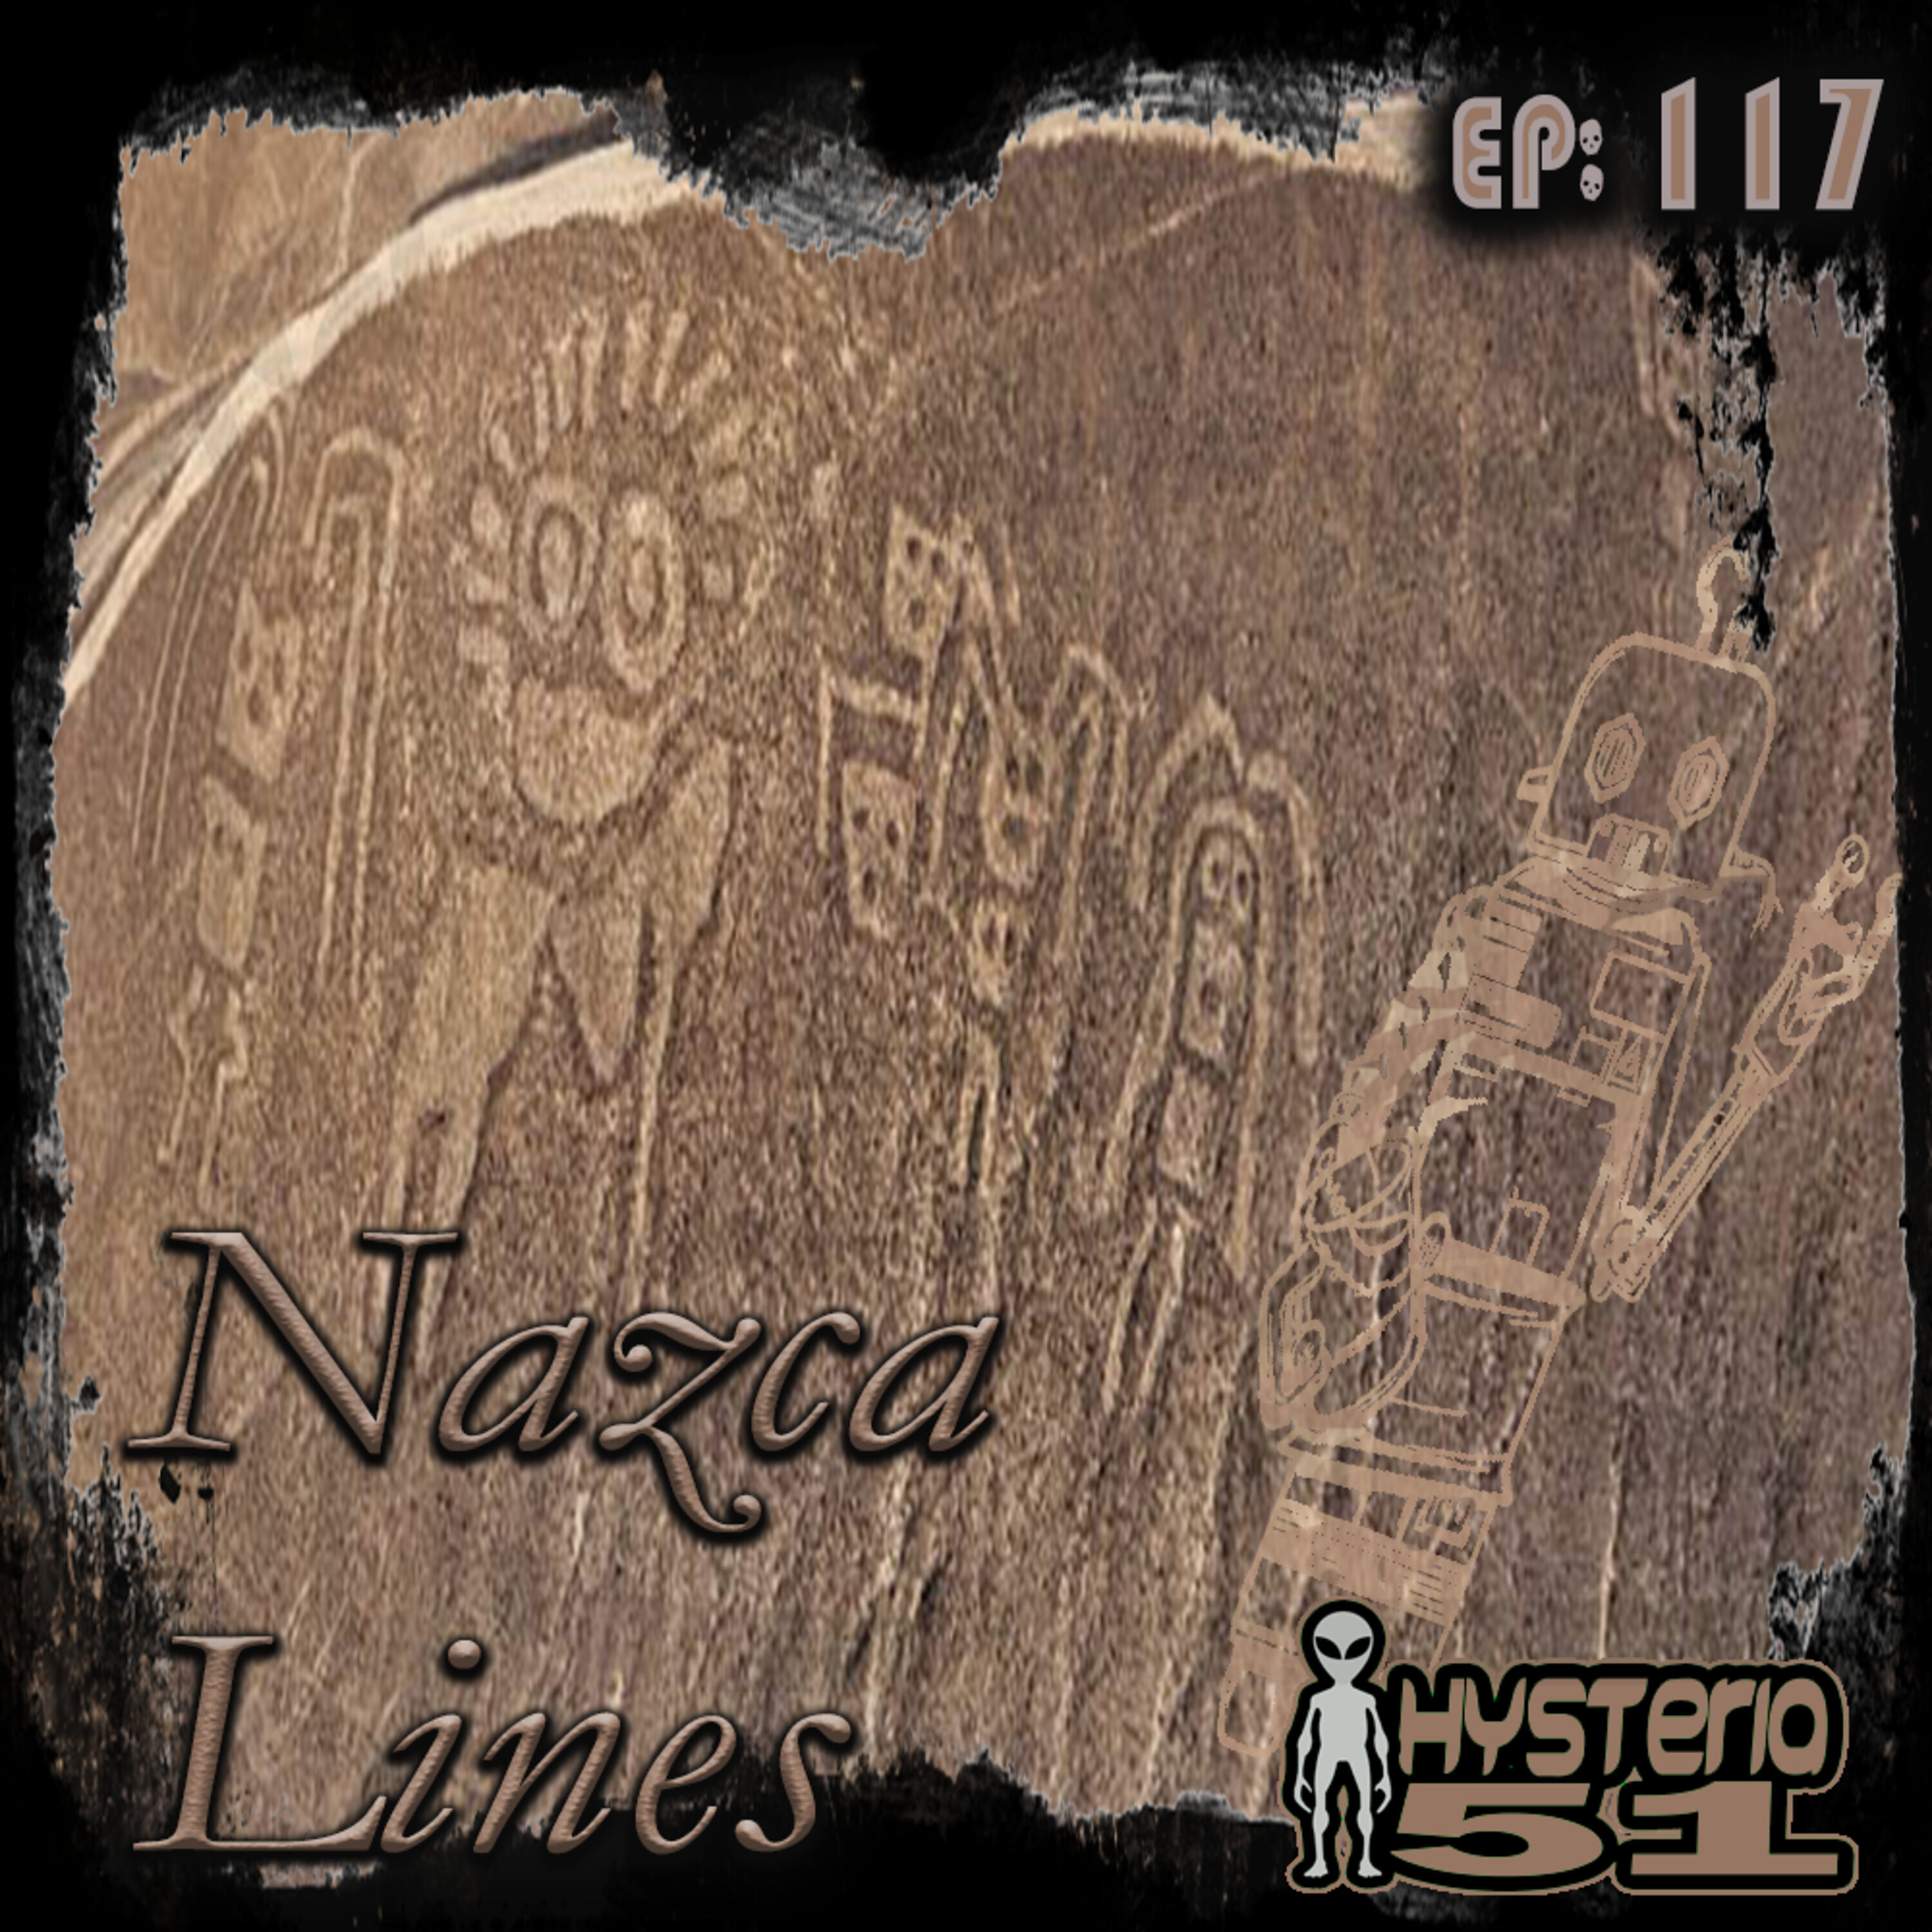 Nazca Lines – Peruvian Artwork or Alien Runways? | 117